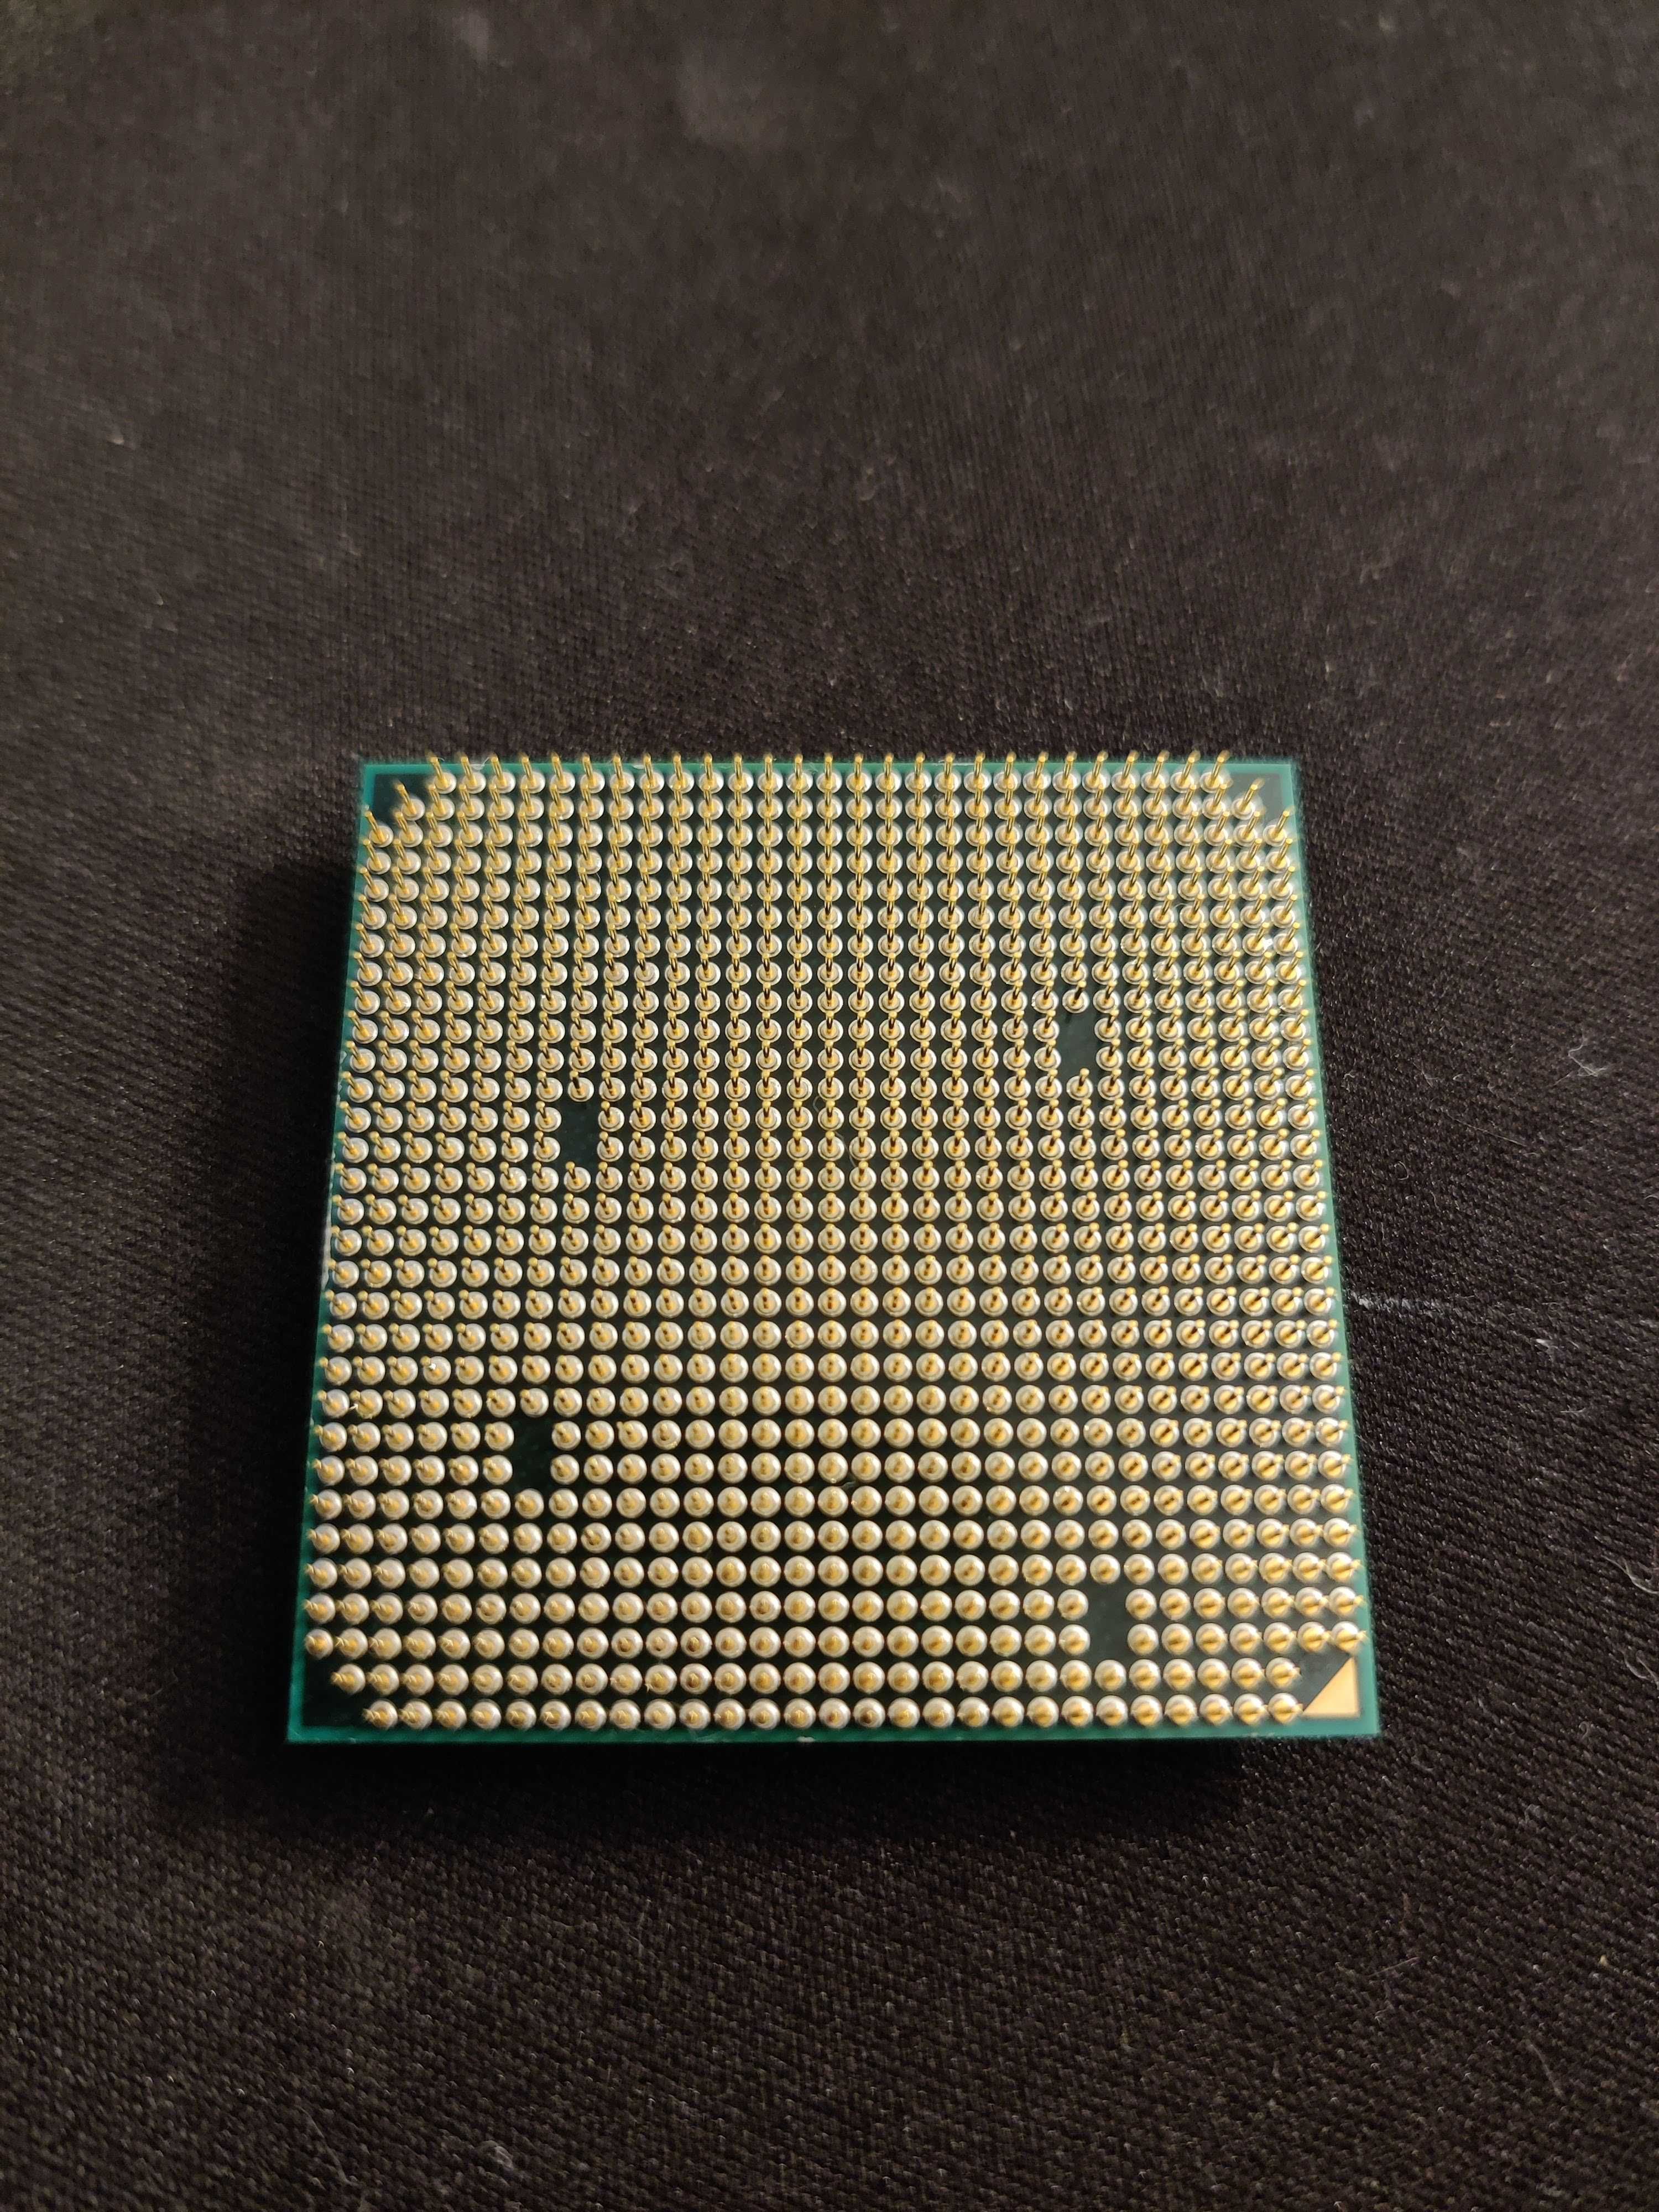 Processador/CPU AMD FX-6350 3.9GHZ 6-Core Black Edition, Socket AM3+